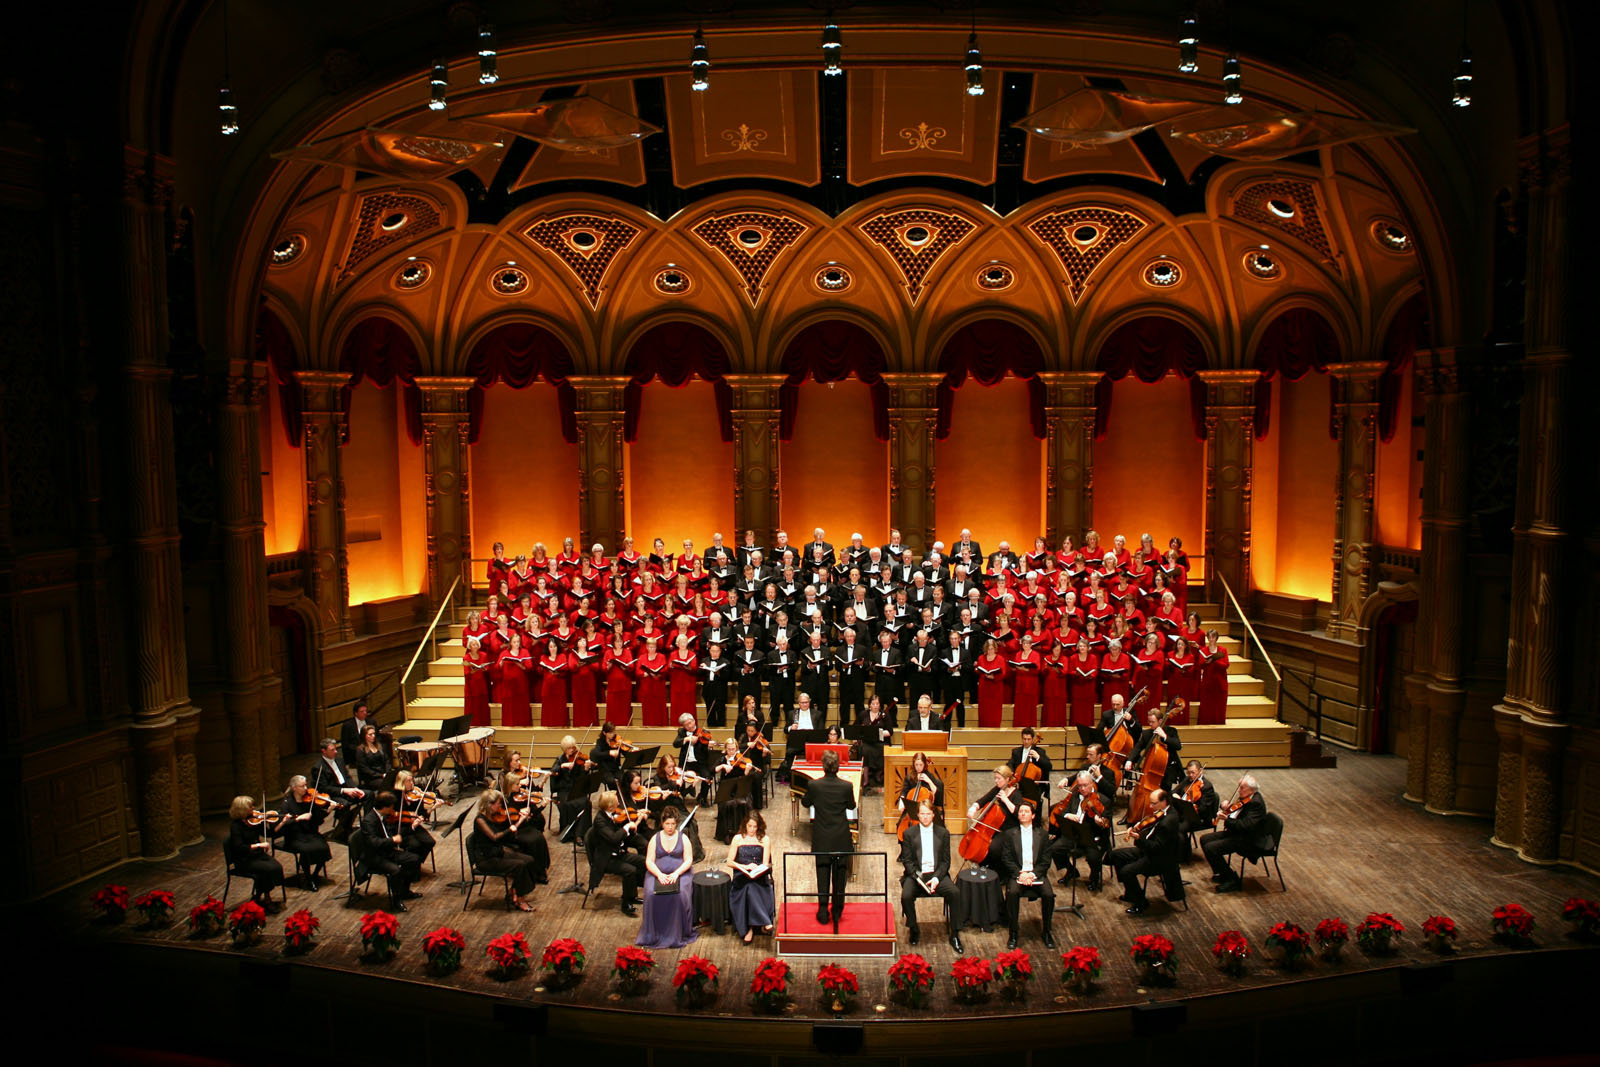 Bach Choir's Christmas concert evokes holiday spirit to all